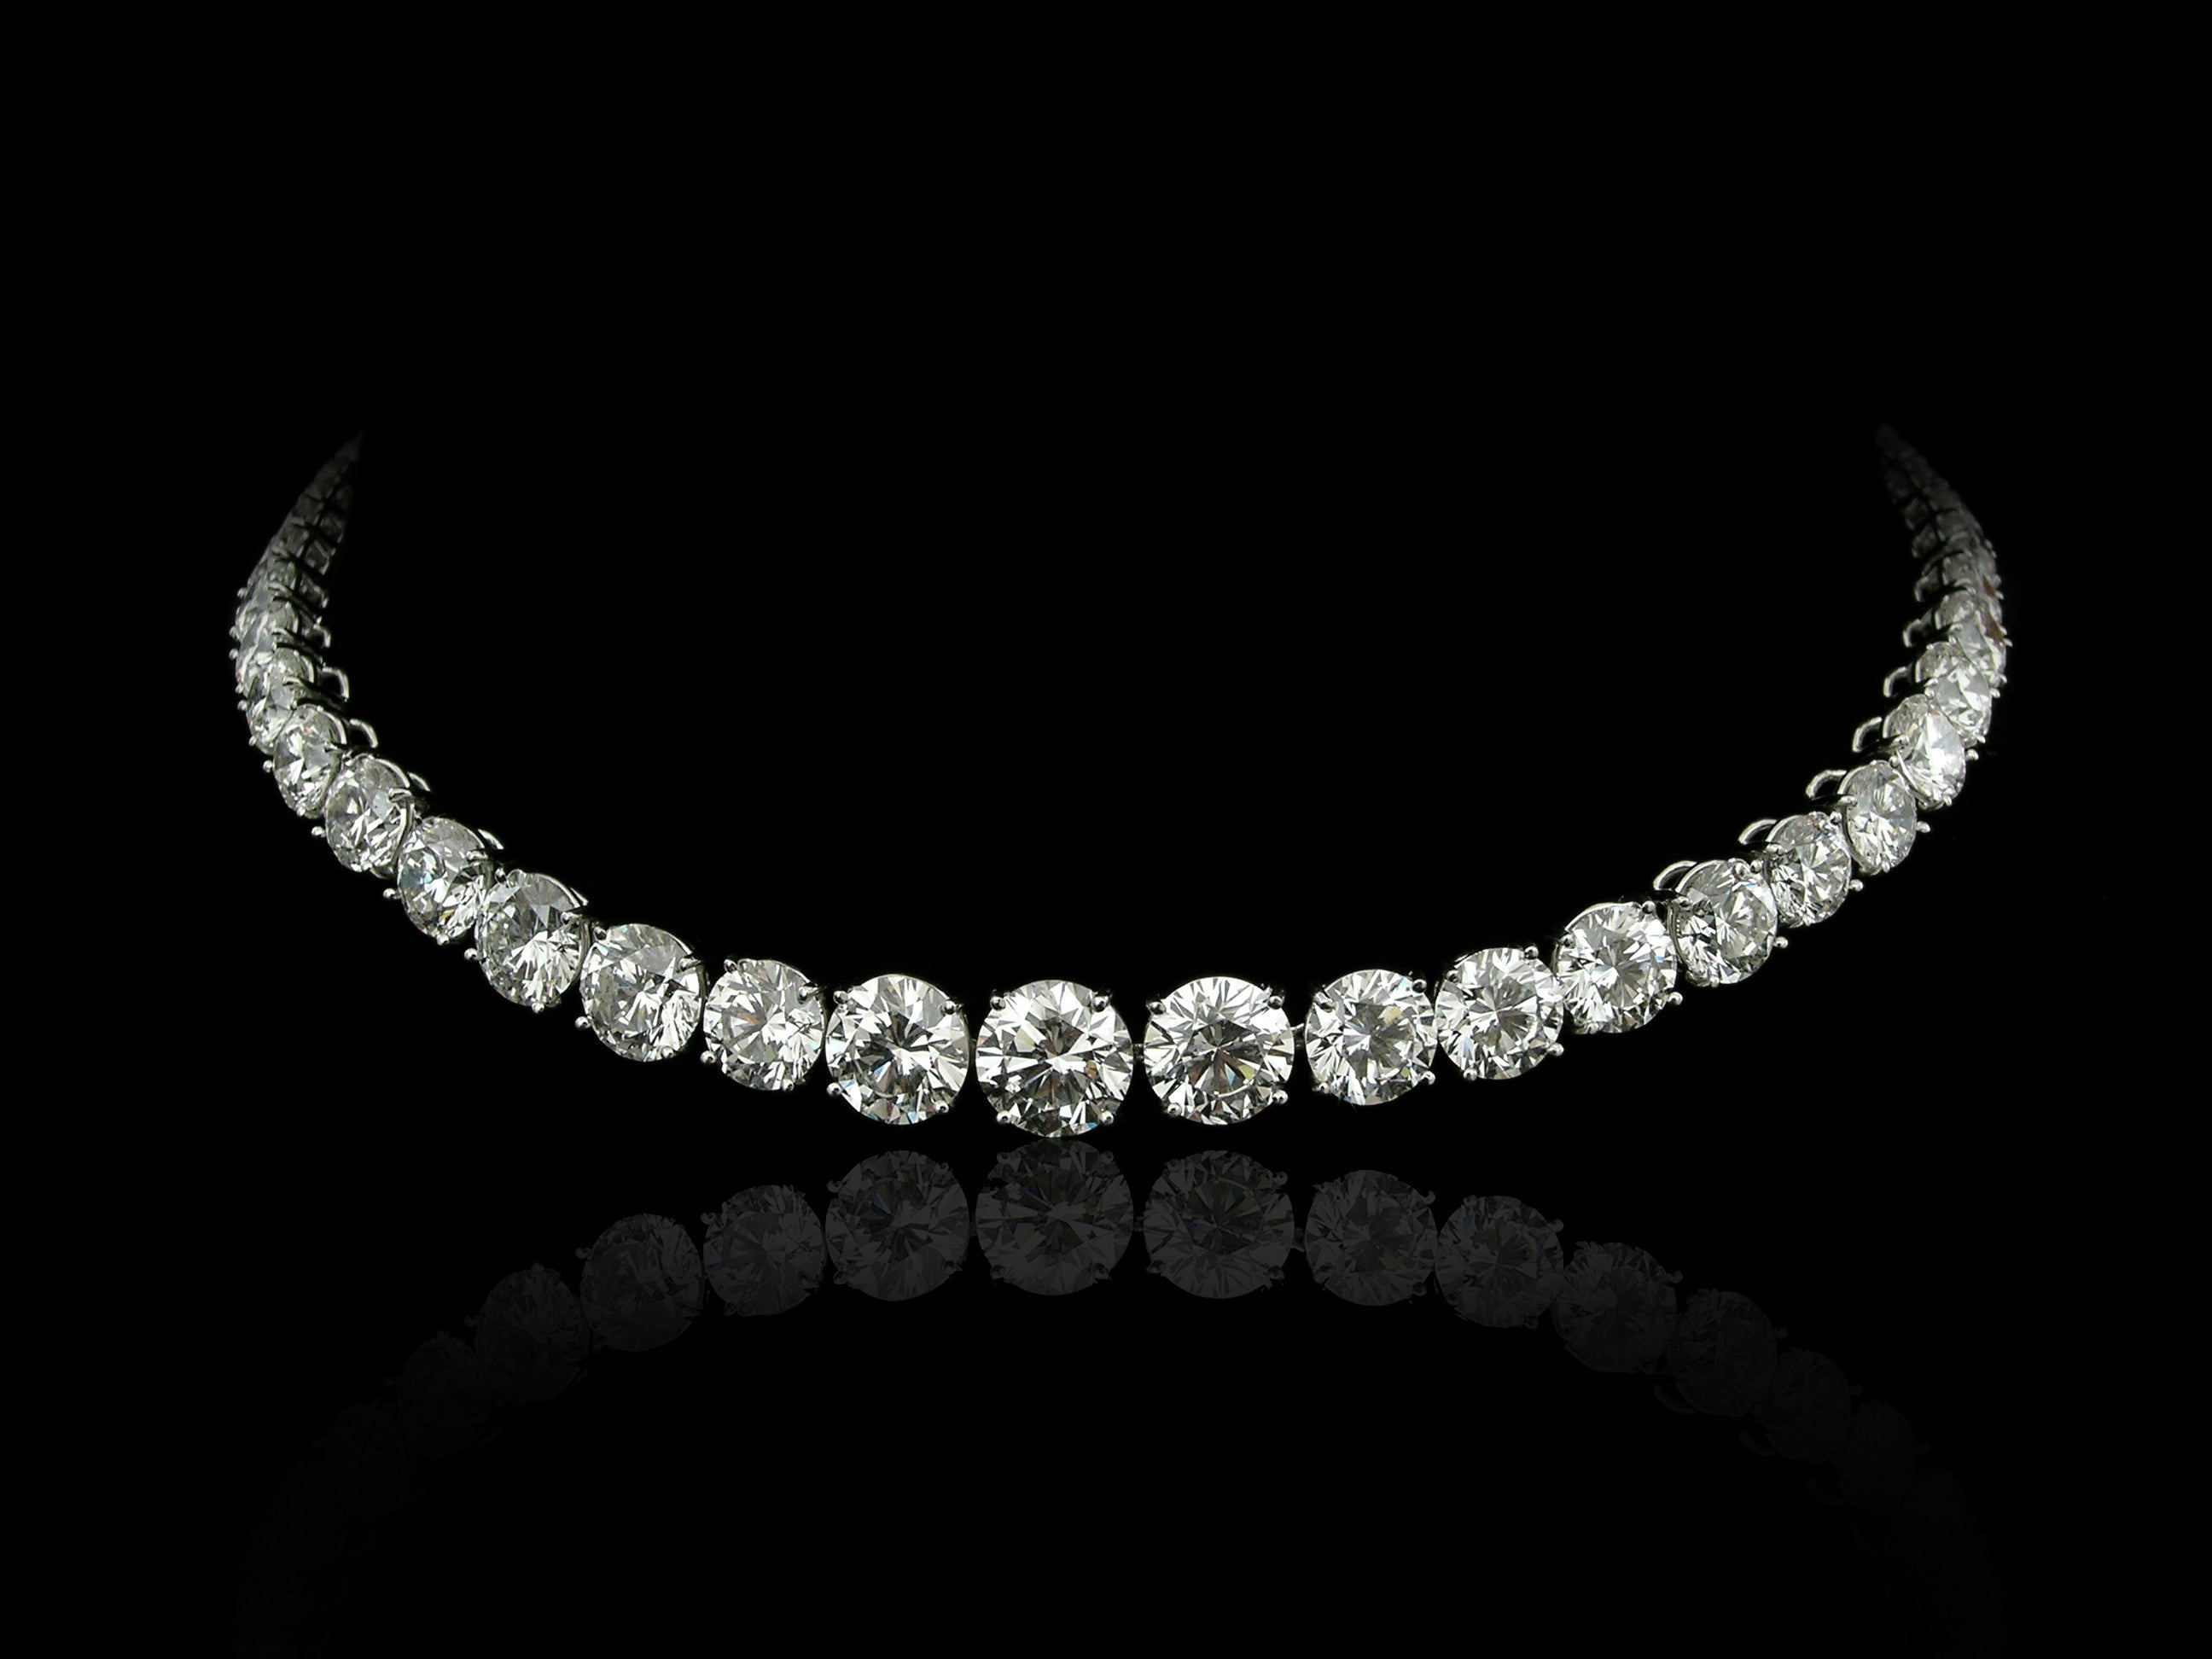 Diamond necklace financing